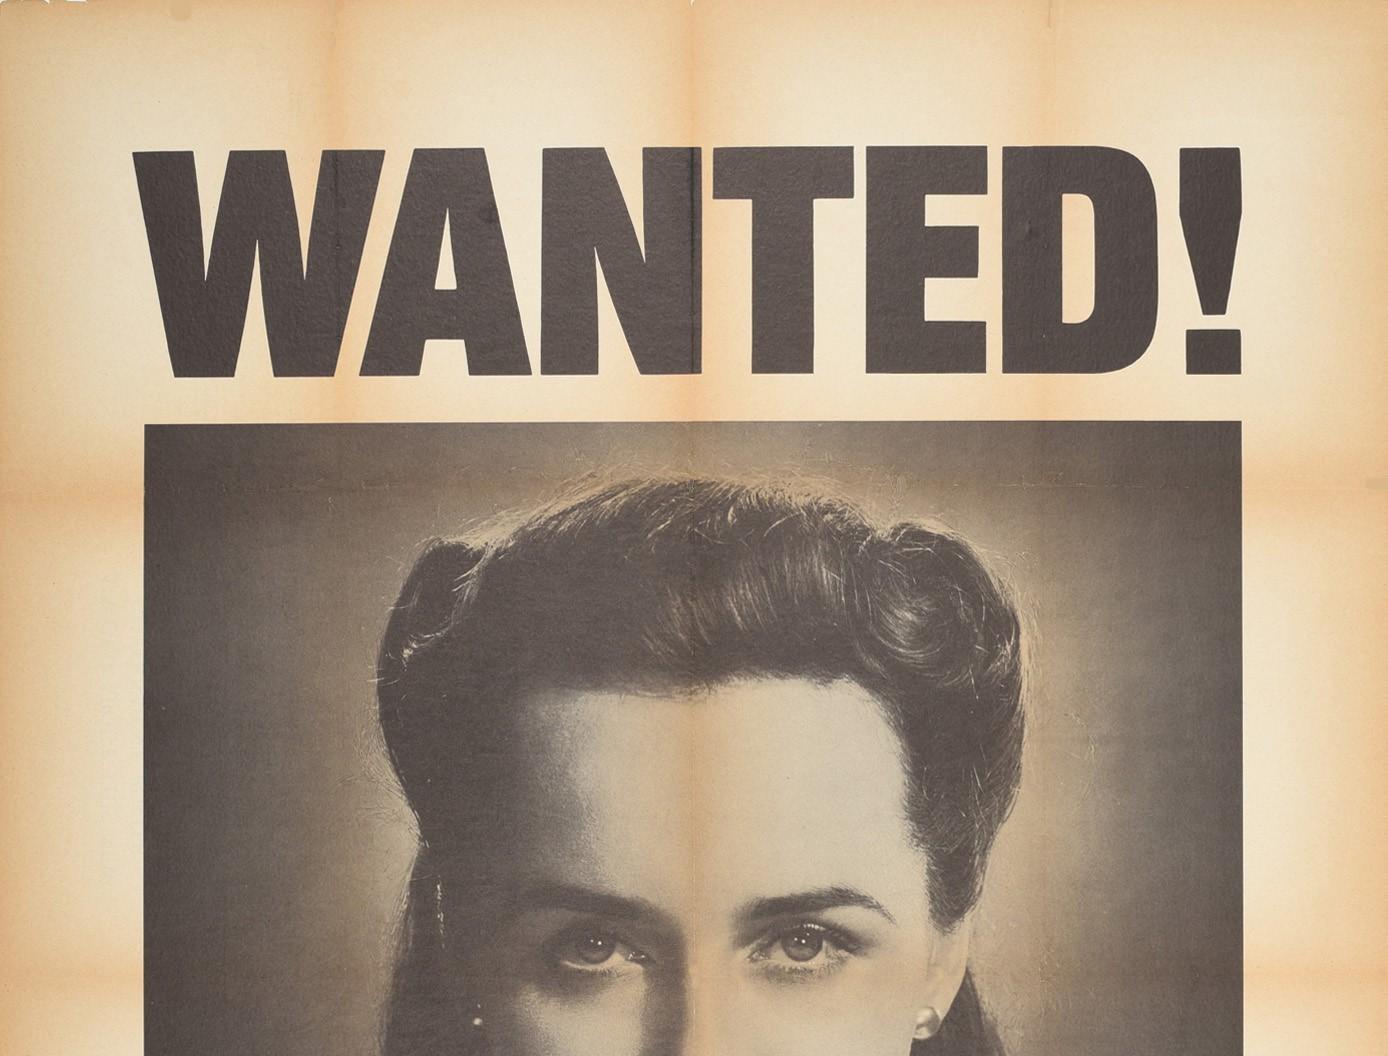 Original Vintage WWII Poster Wanted For Murder Careless Talk Costs Lives Warning - Print by Victor Keppler